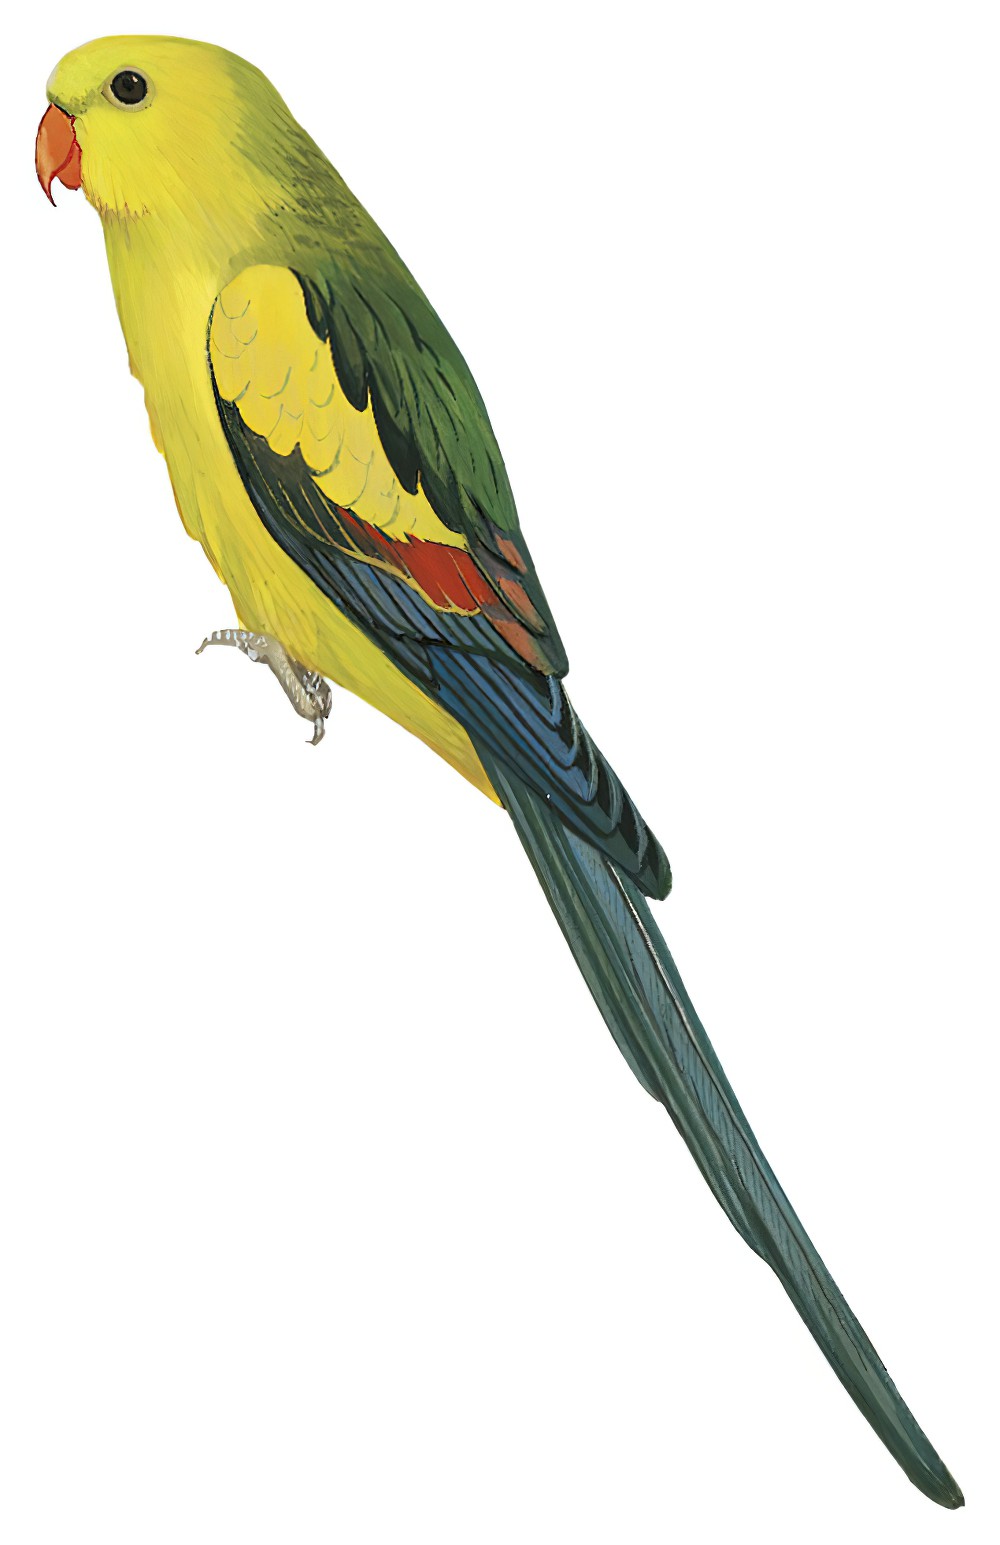 Regent Parrot / Polytelis anthopeplus